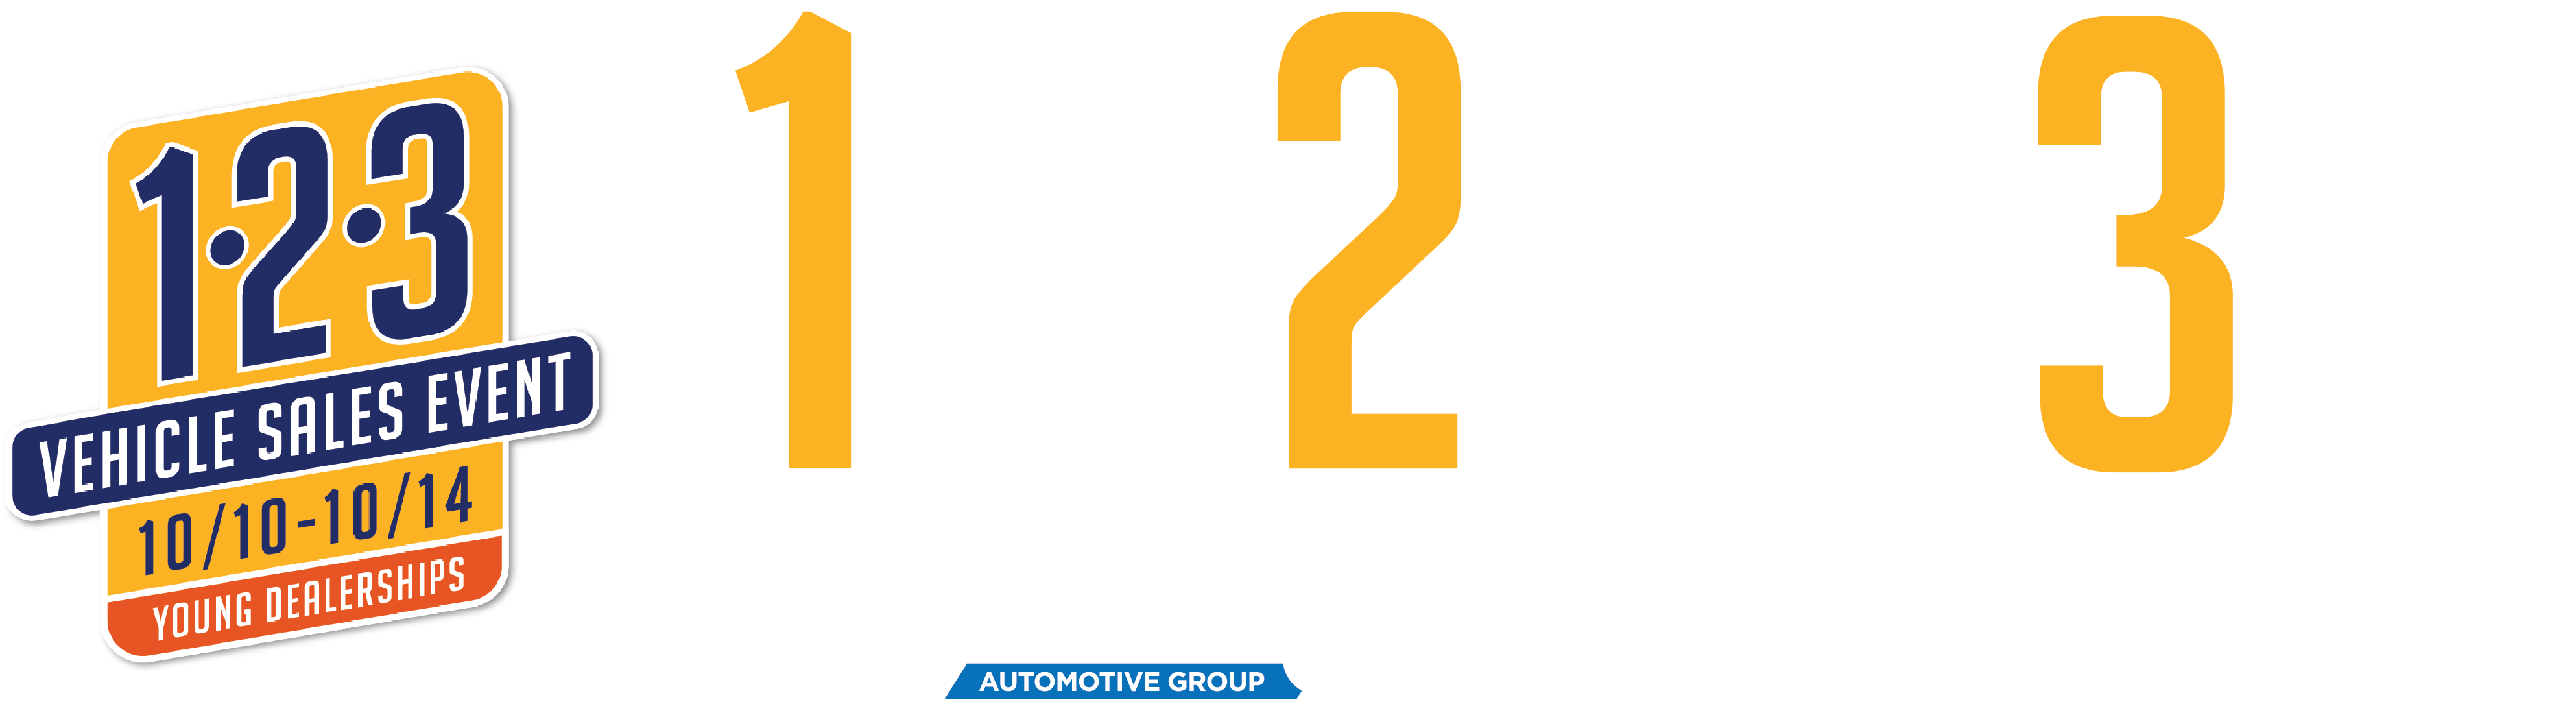 Vehicle Sales Event Promotion Banner